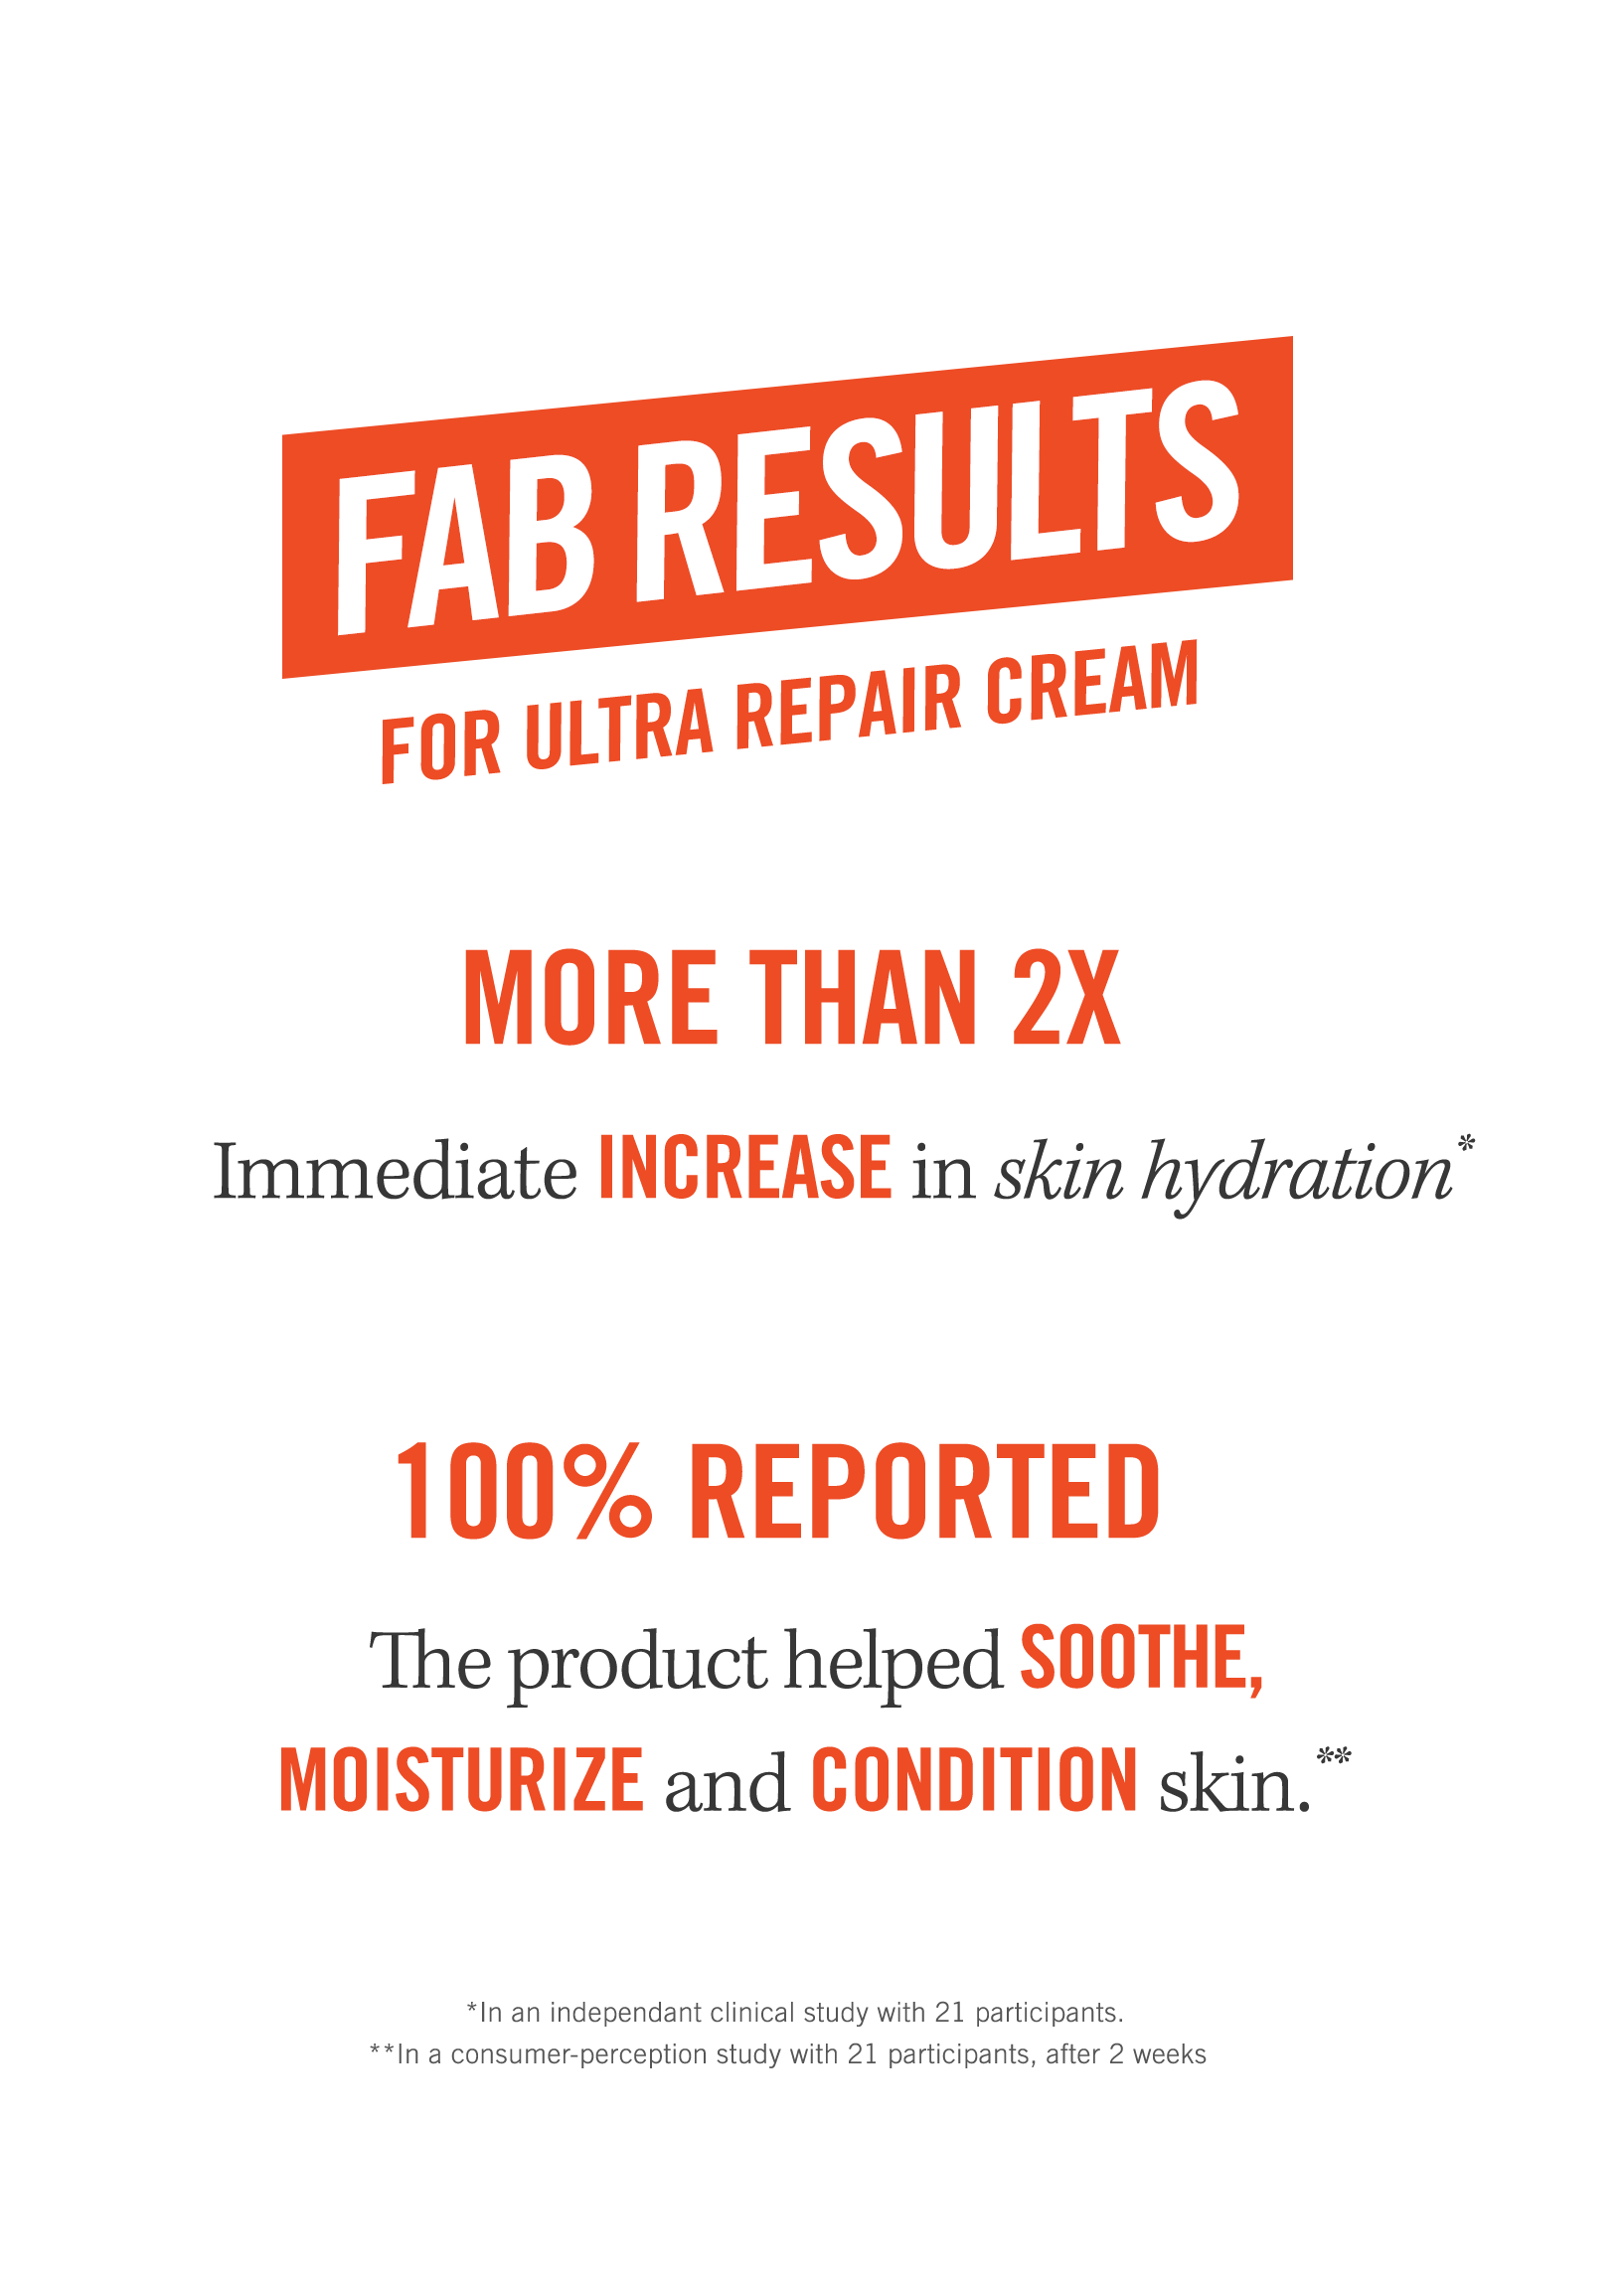 FAB results for ultra repair cream. Claims for ultra repair cream.